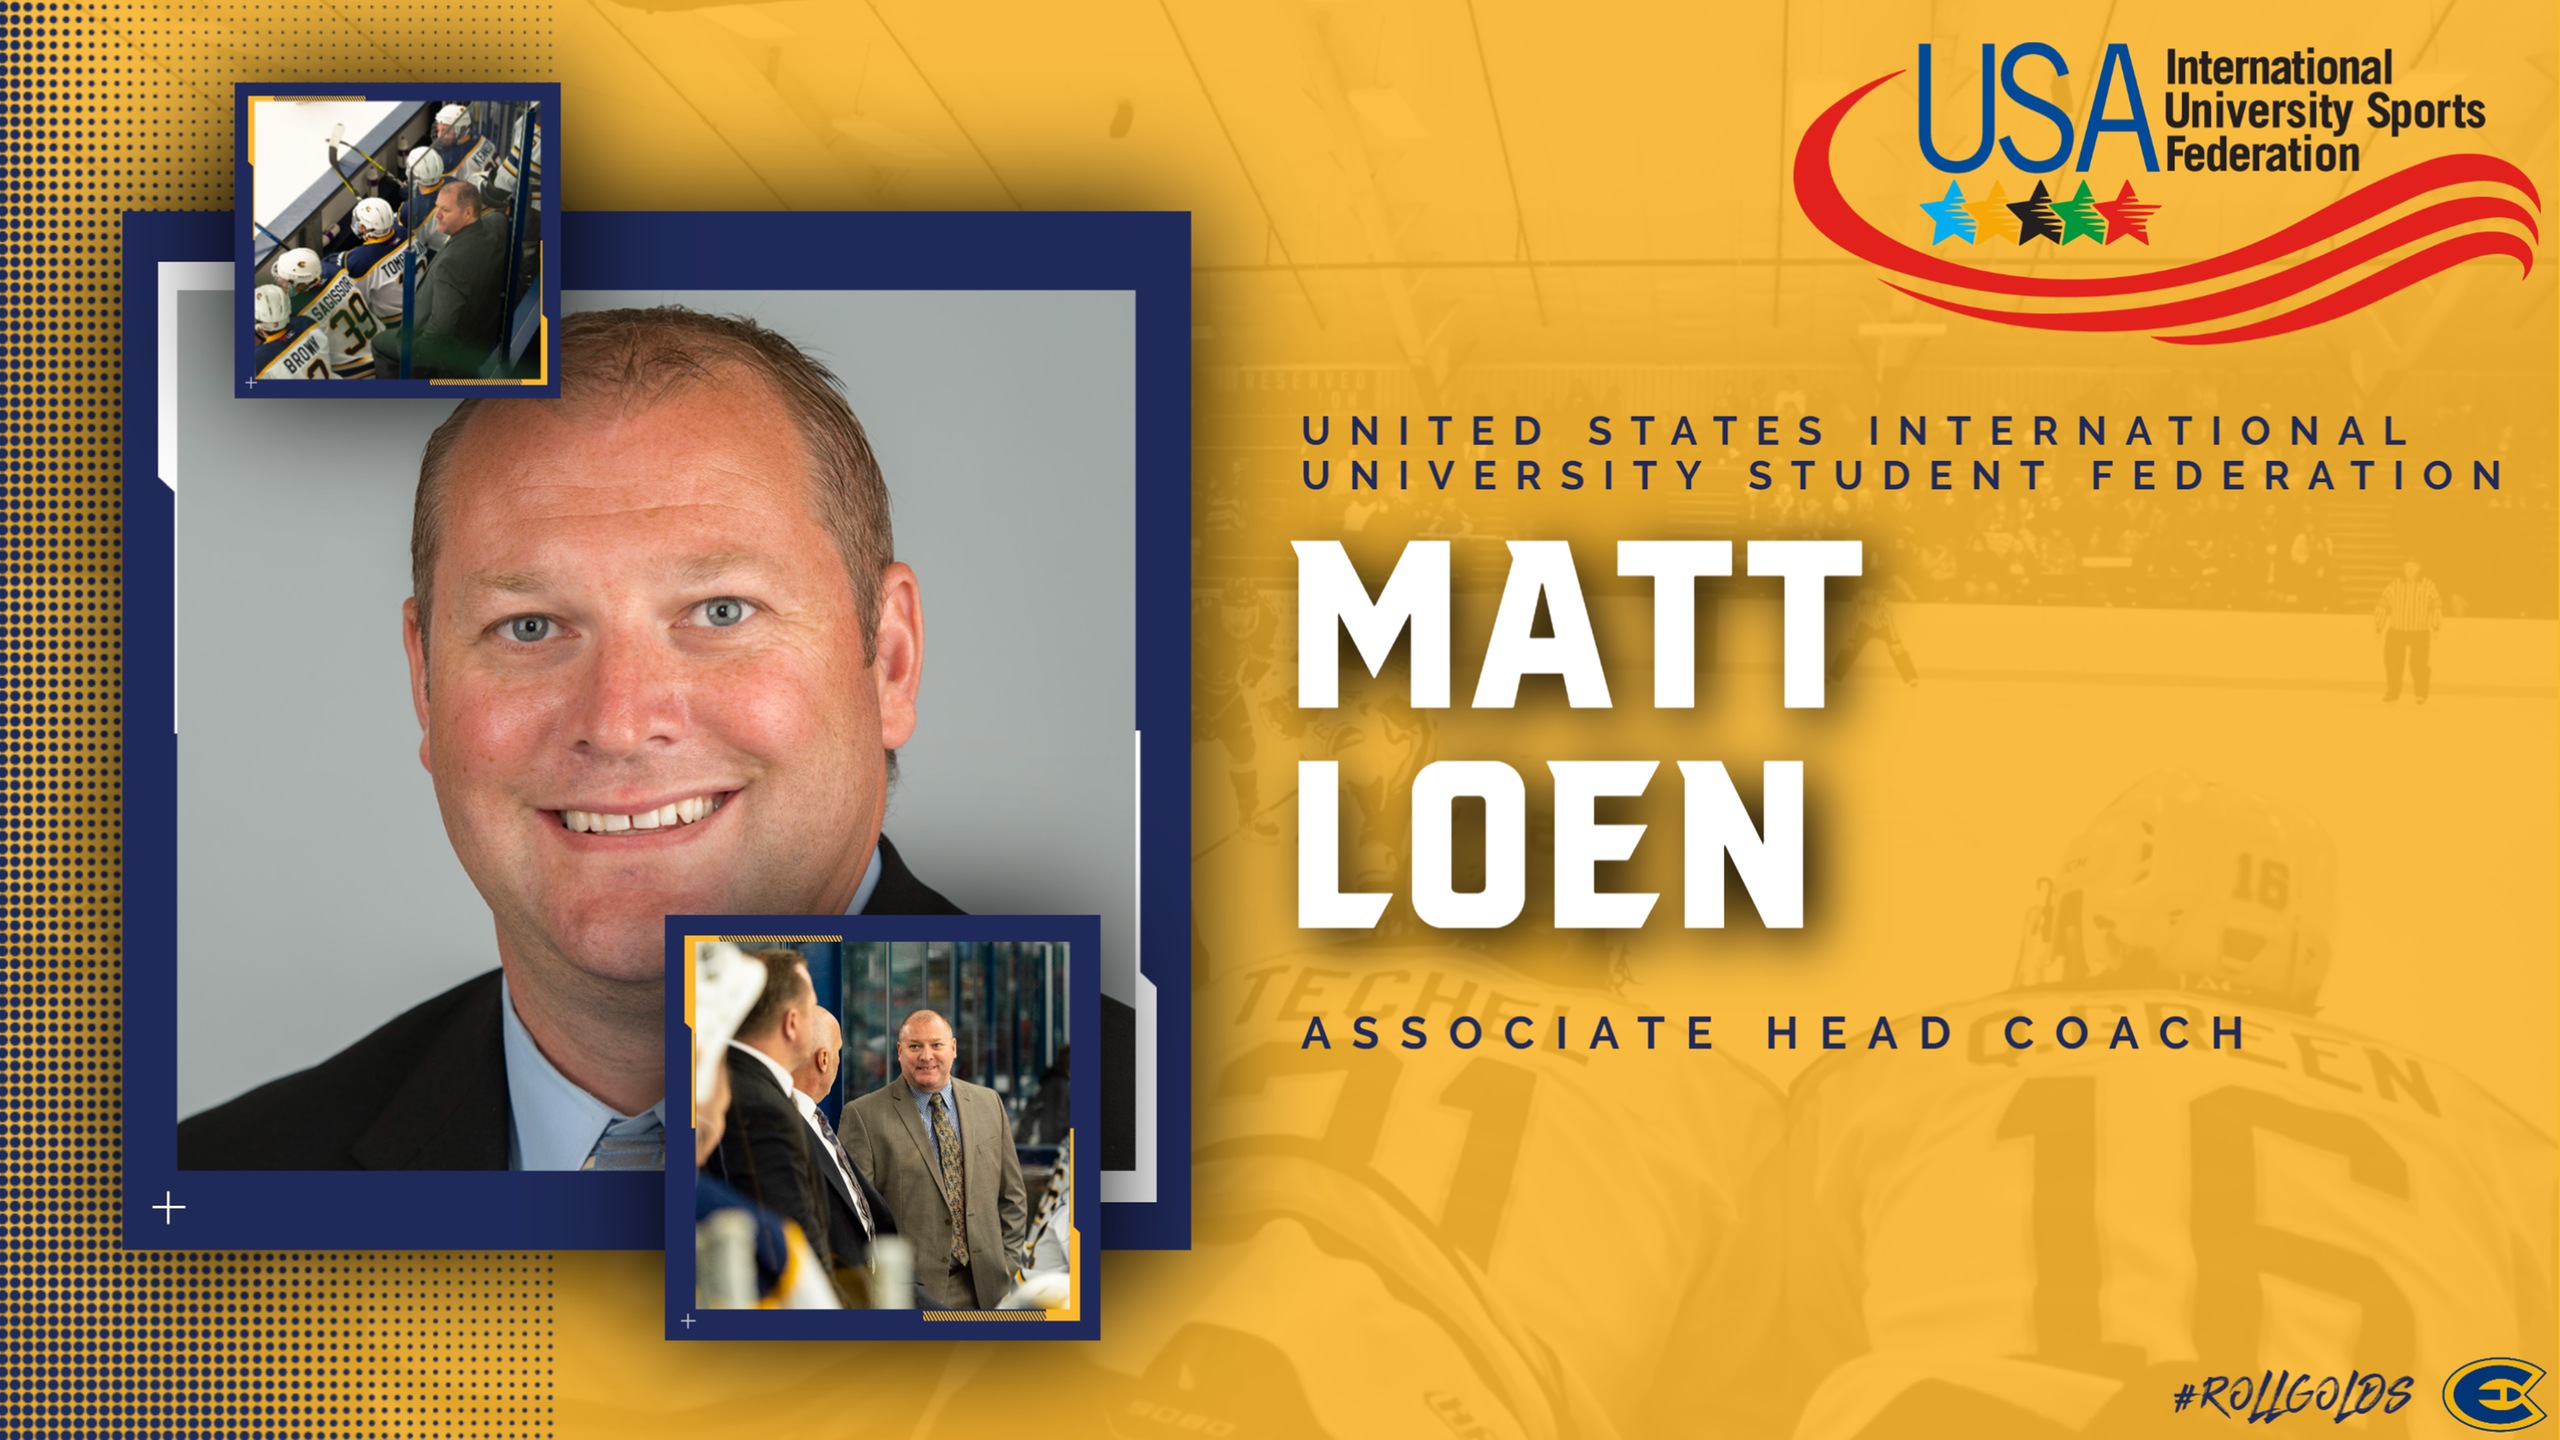 Loen Named Associate Head Coach for USA World University Hockey Team